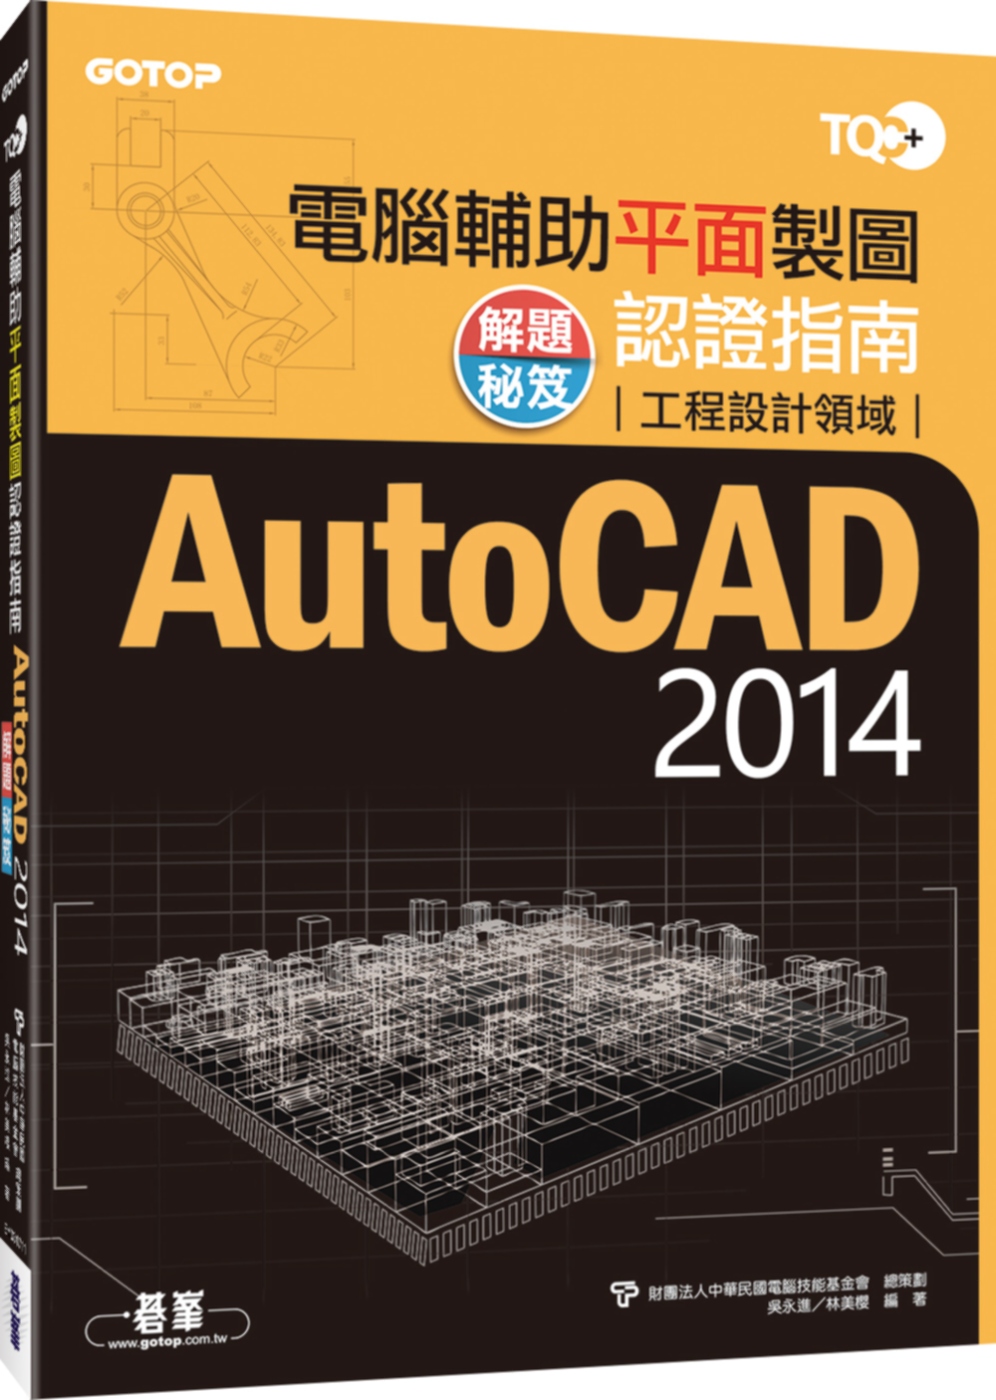 TQC+電腦輔助平面製圖認證指南解題秘笈AutoCAD 20...